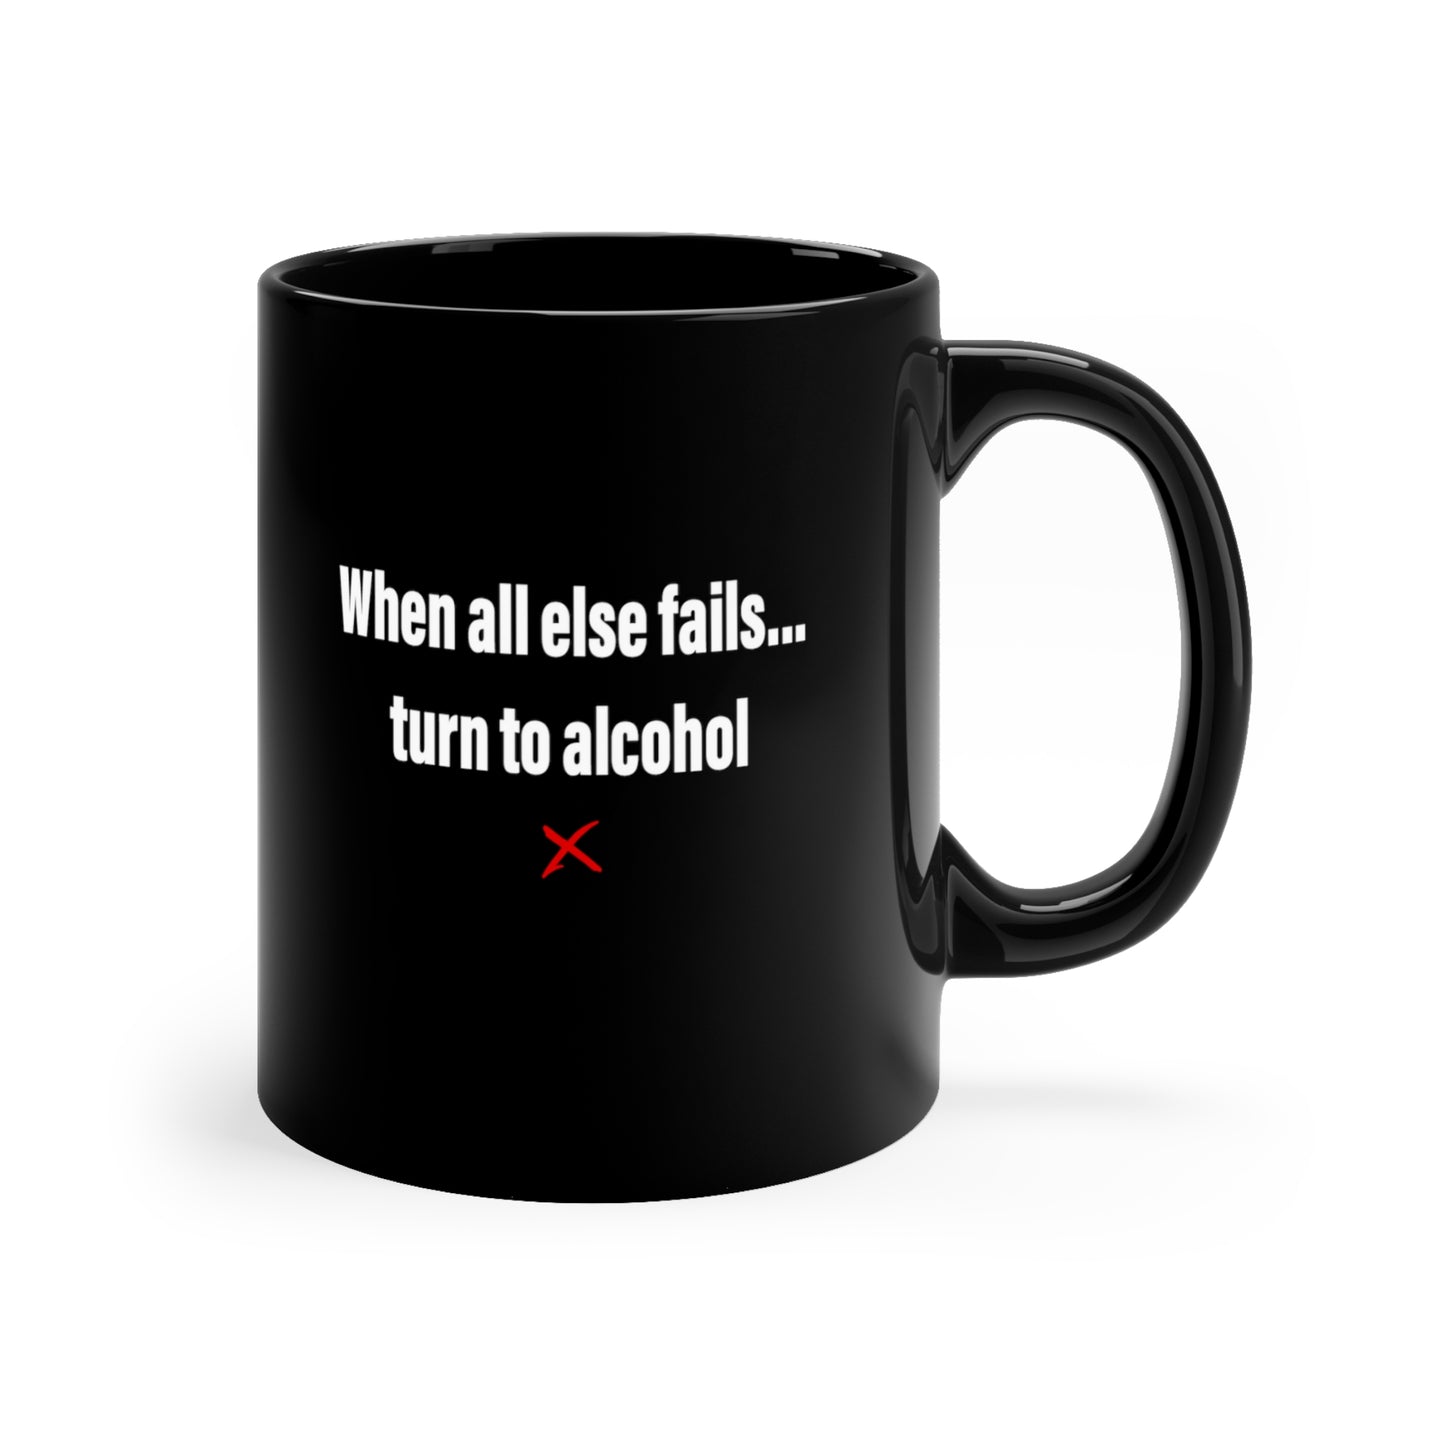 When all else fails... turn to alcohol - Mug